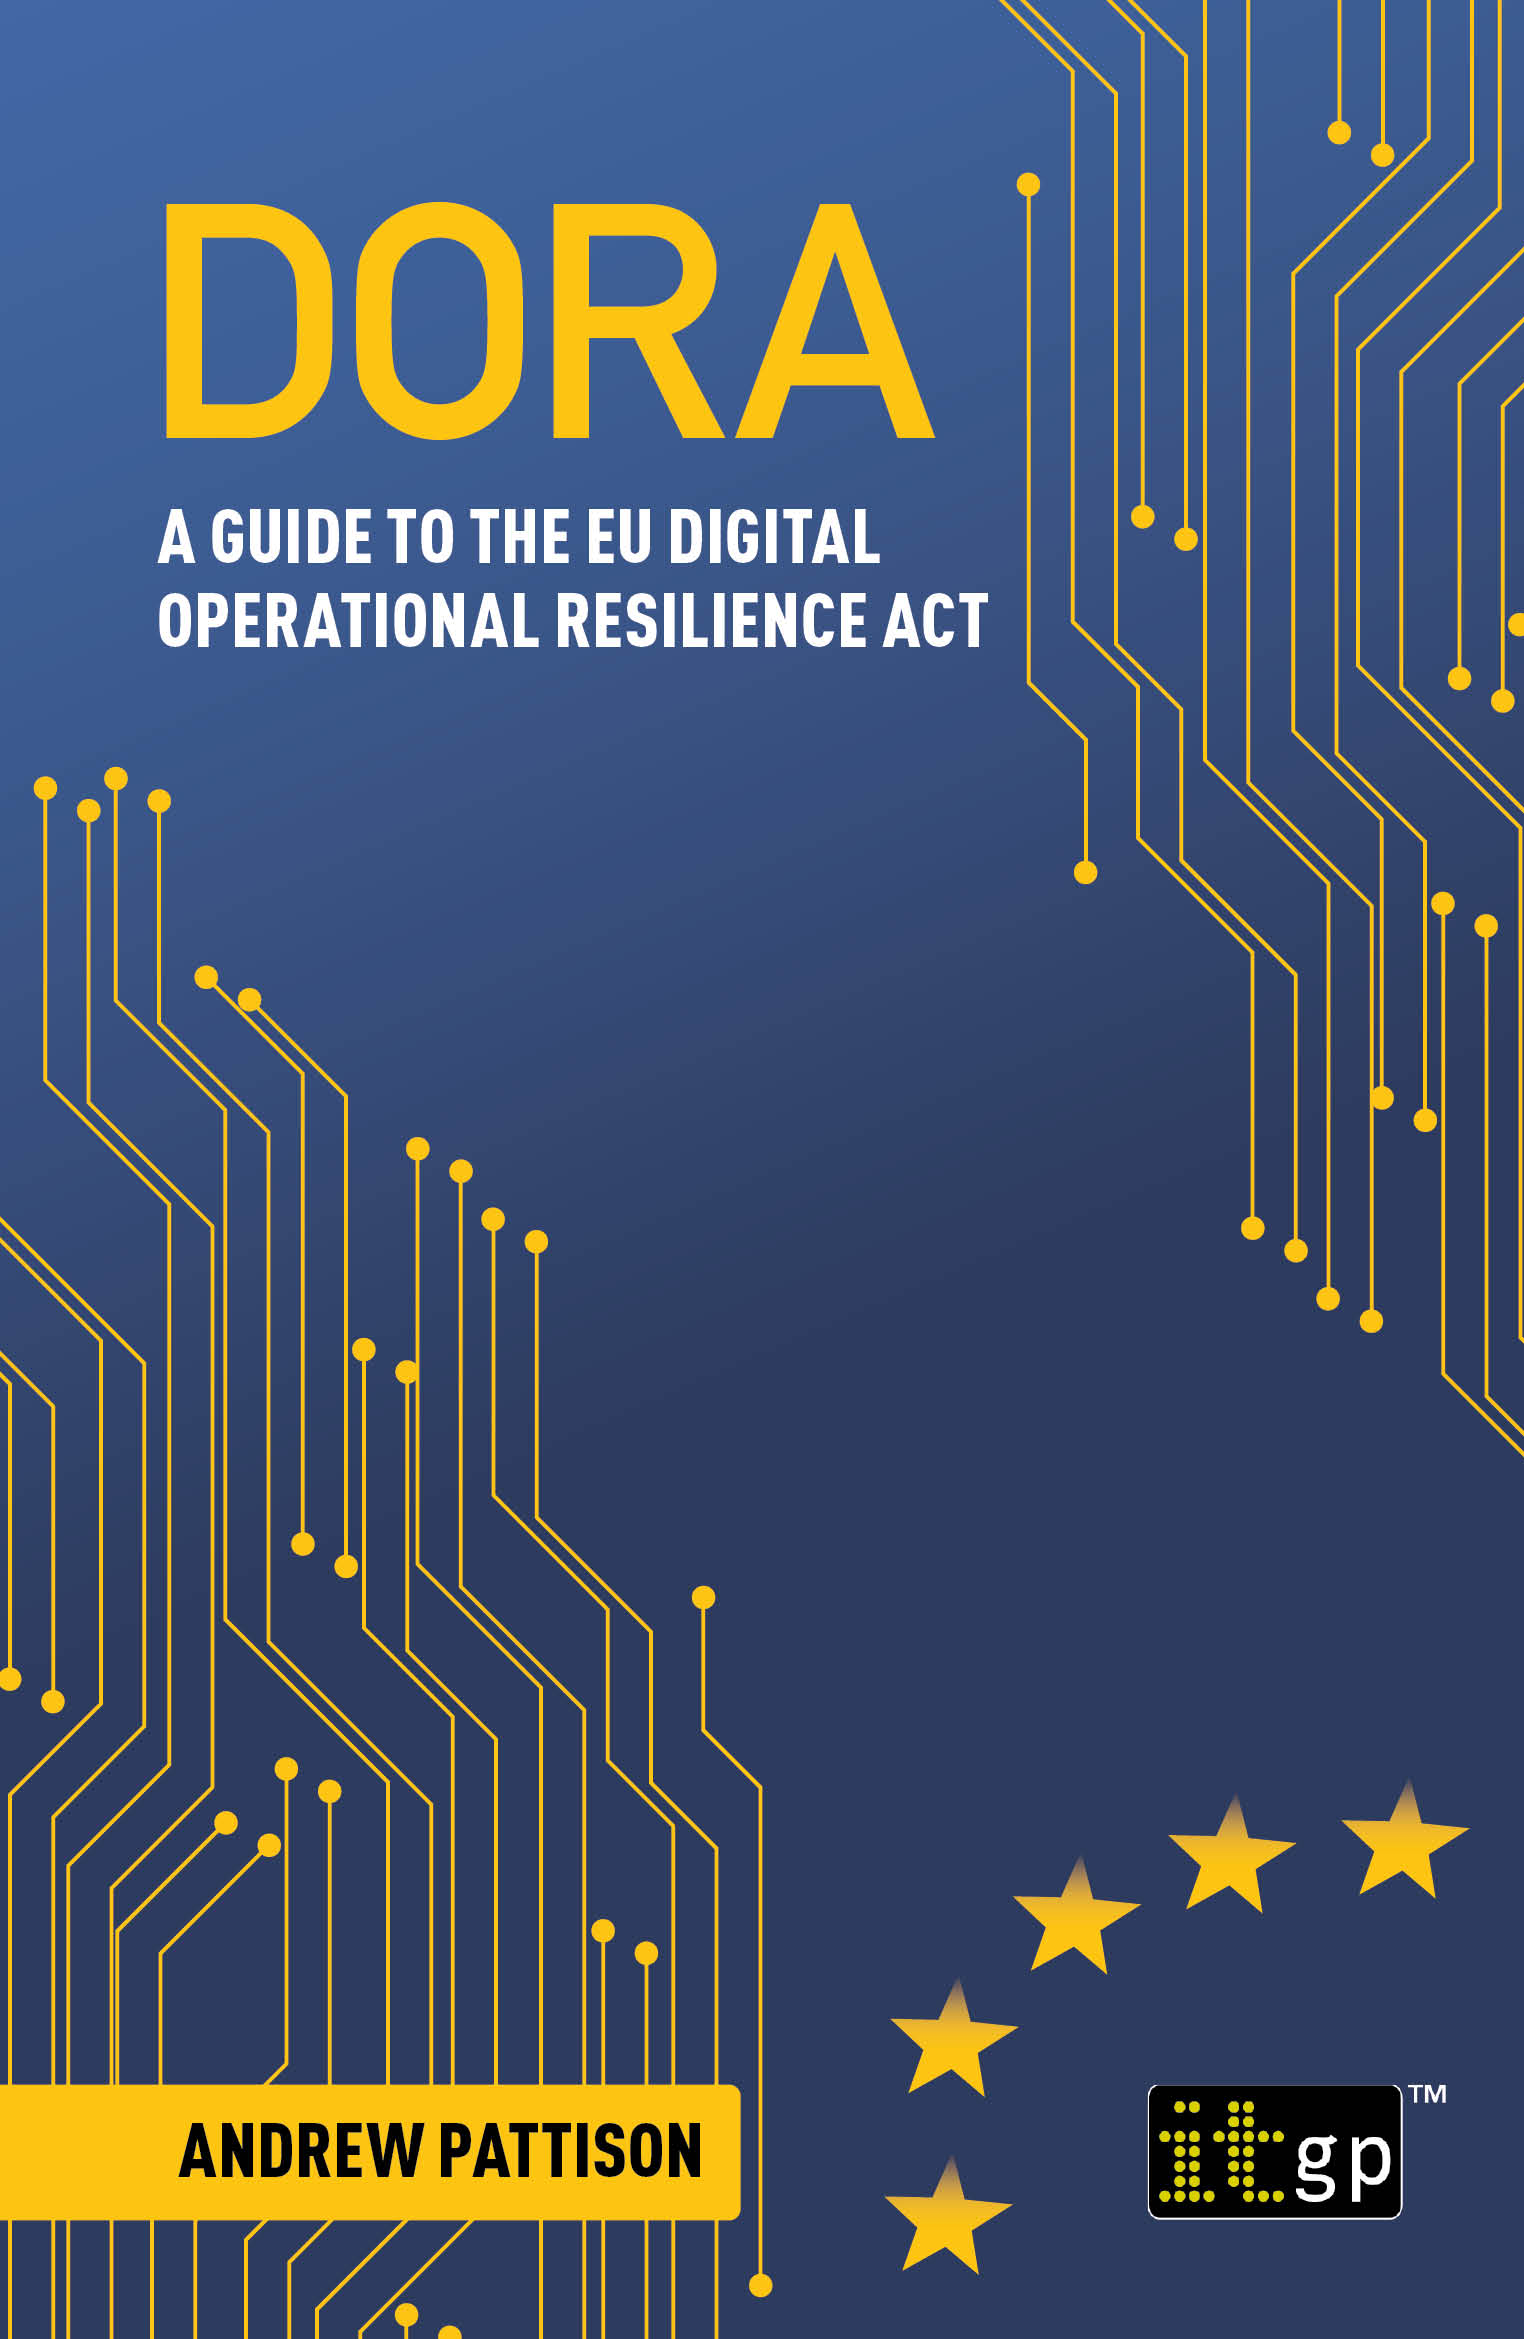 DORA – A Guide to the EU Digital Operational Resilience Act